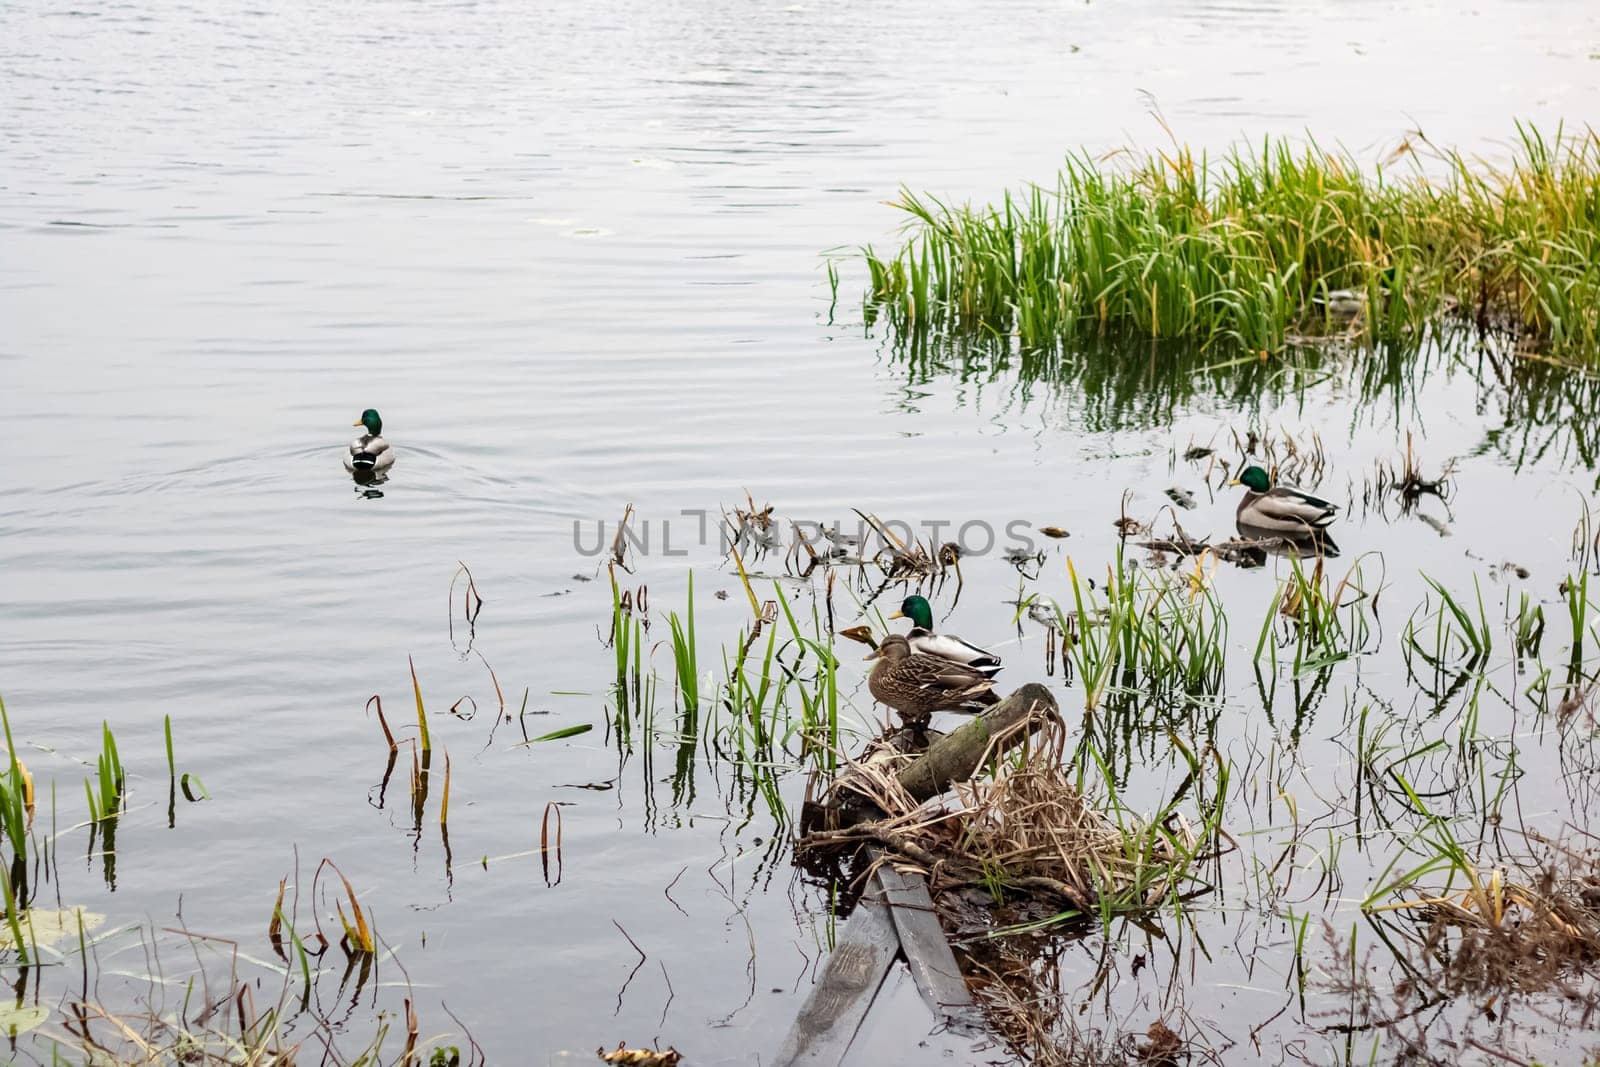 Ducks swim in the water near the shore of river